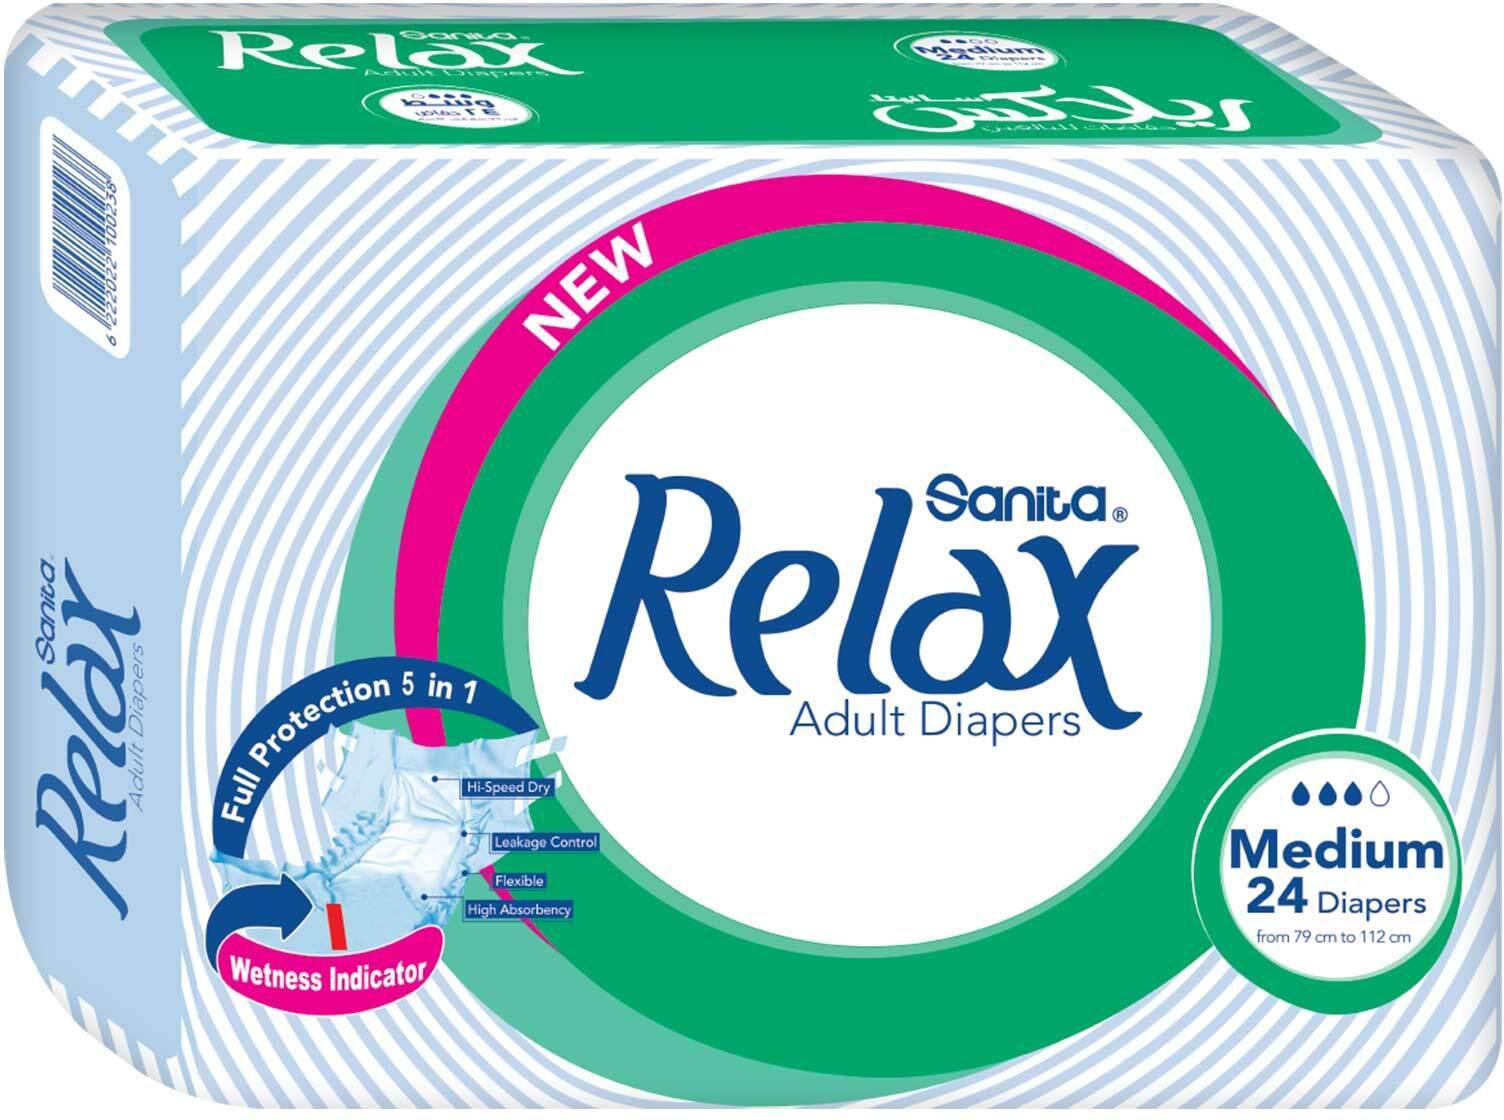 Relax Adult Diapers, Medium - 24 Diaper